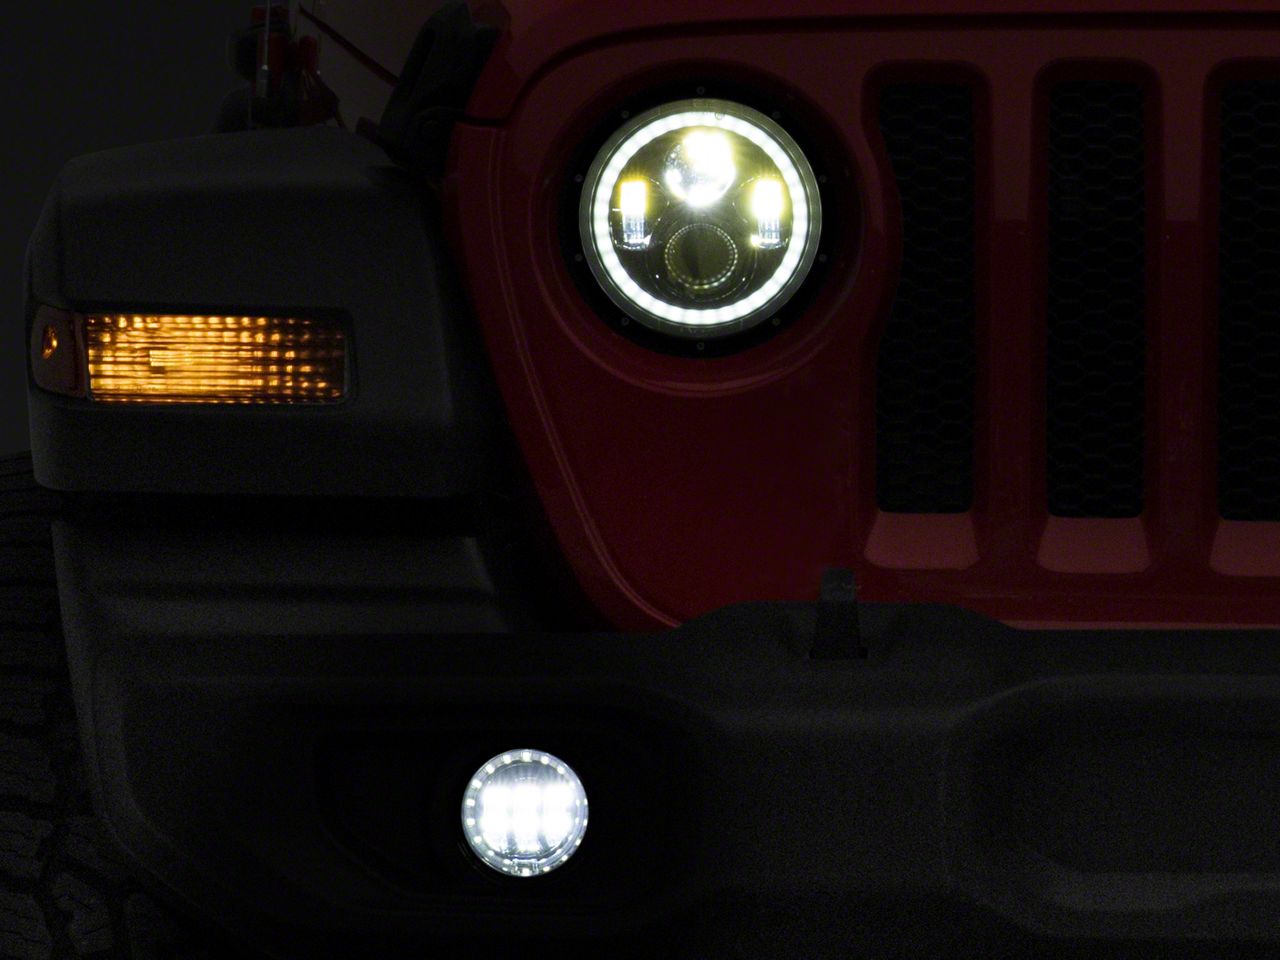 for Jeep Wrangler JK 2007 Smoked LED Tail Lights+Black Headlights+Fog+Turn Kits